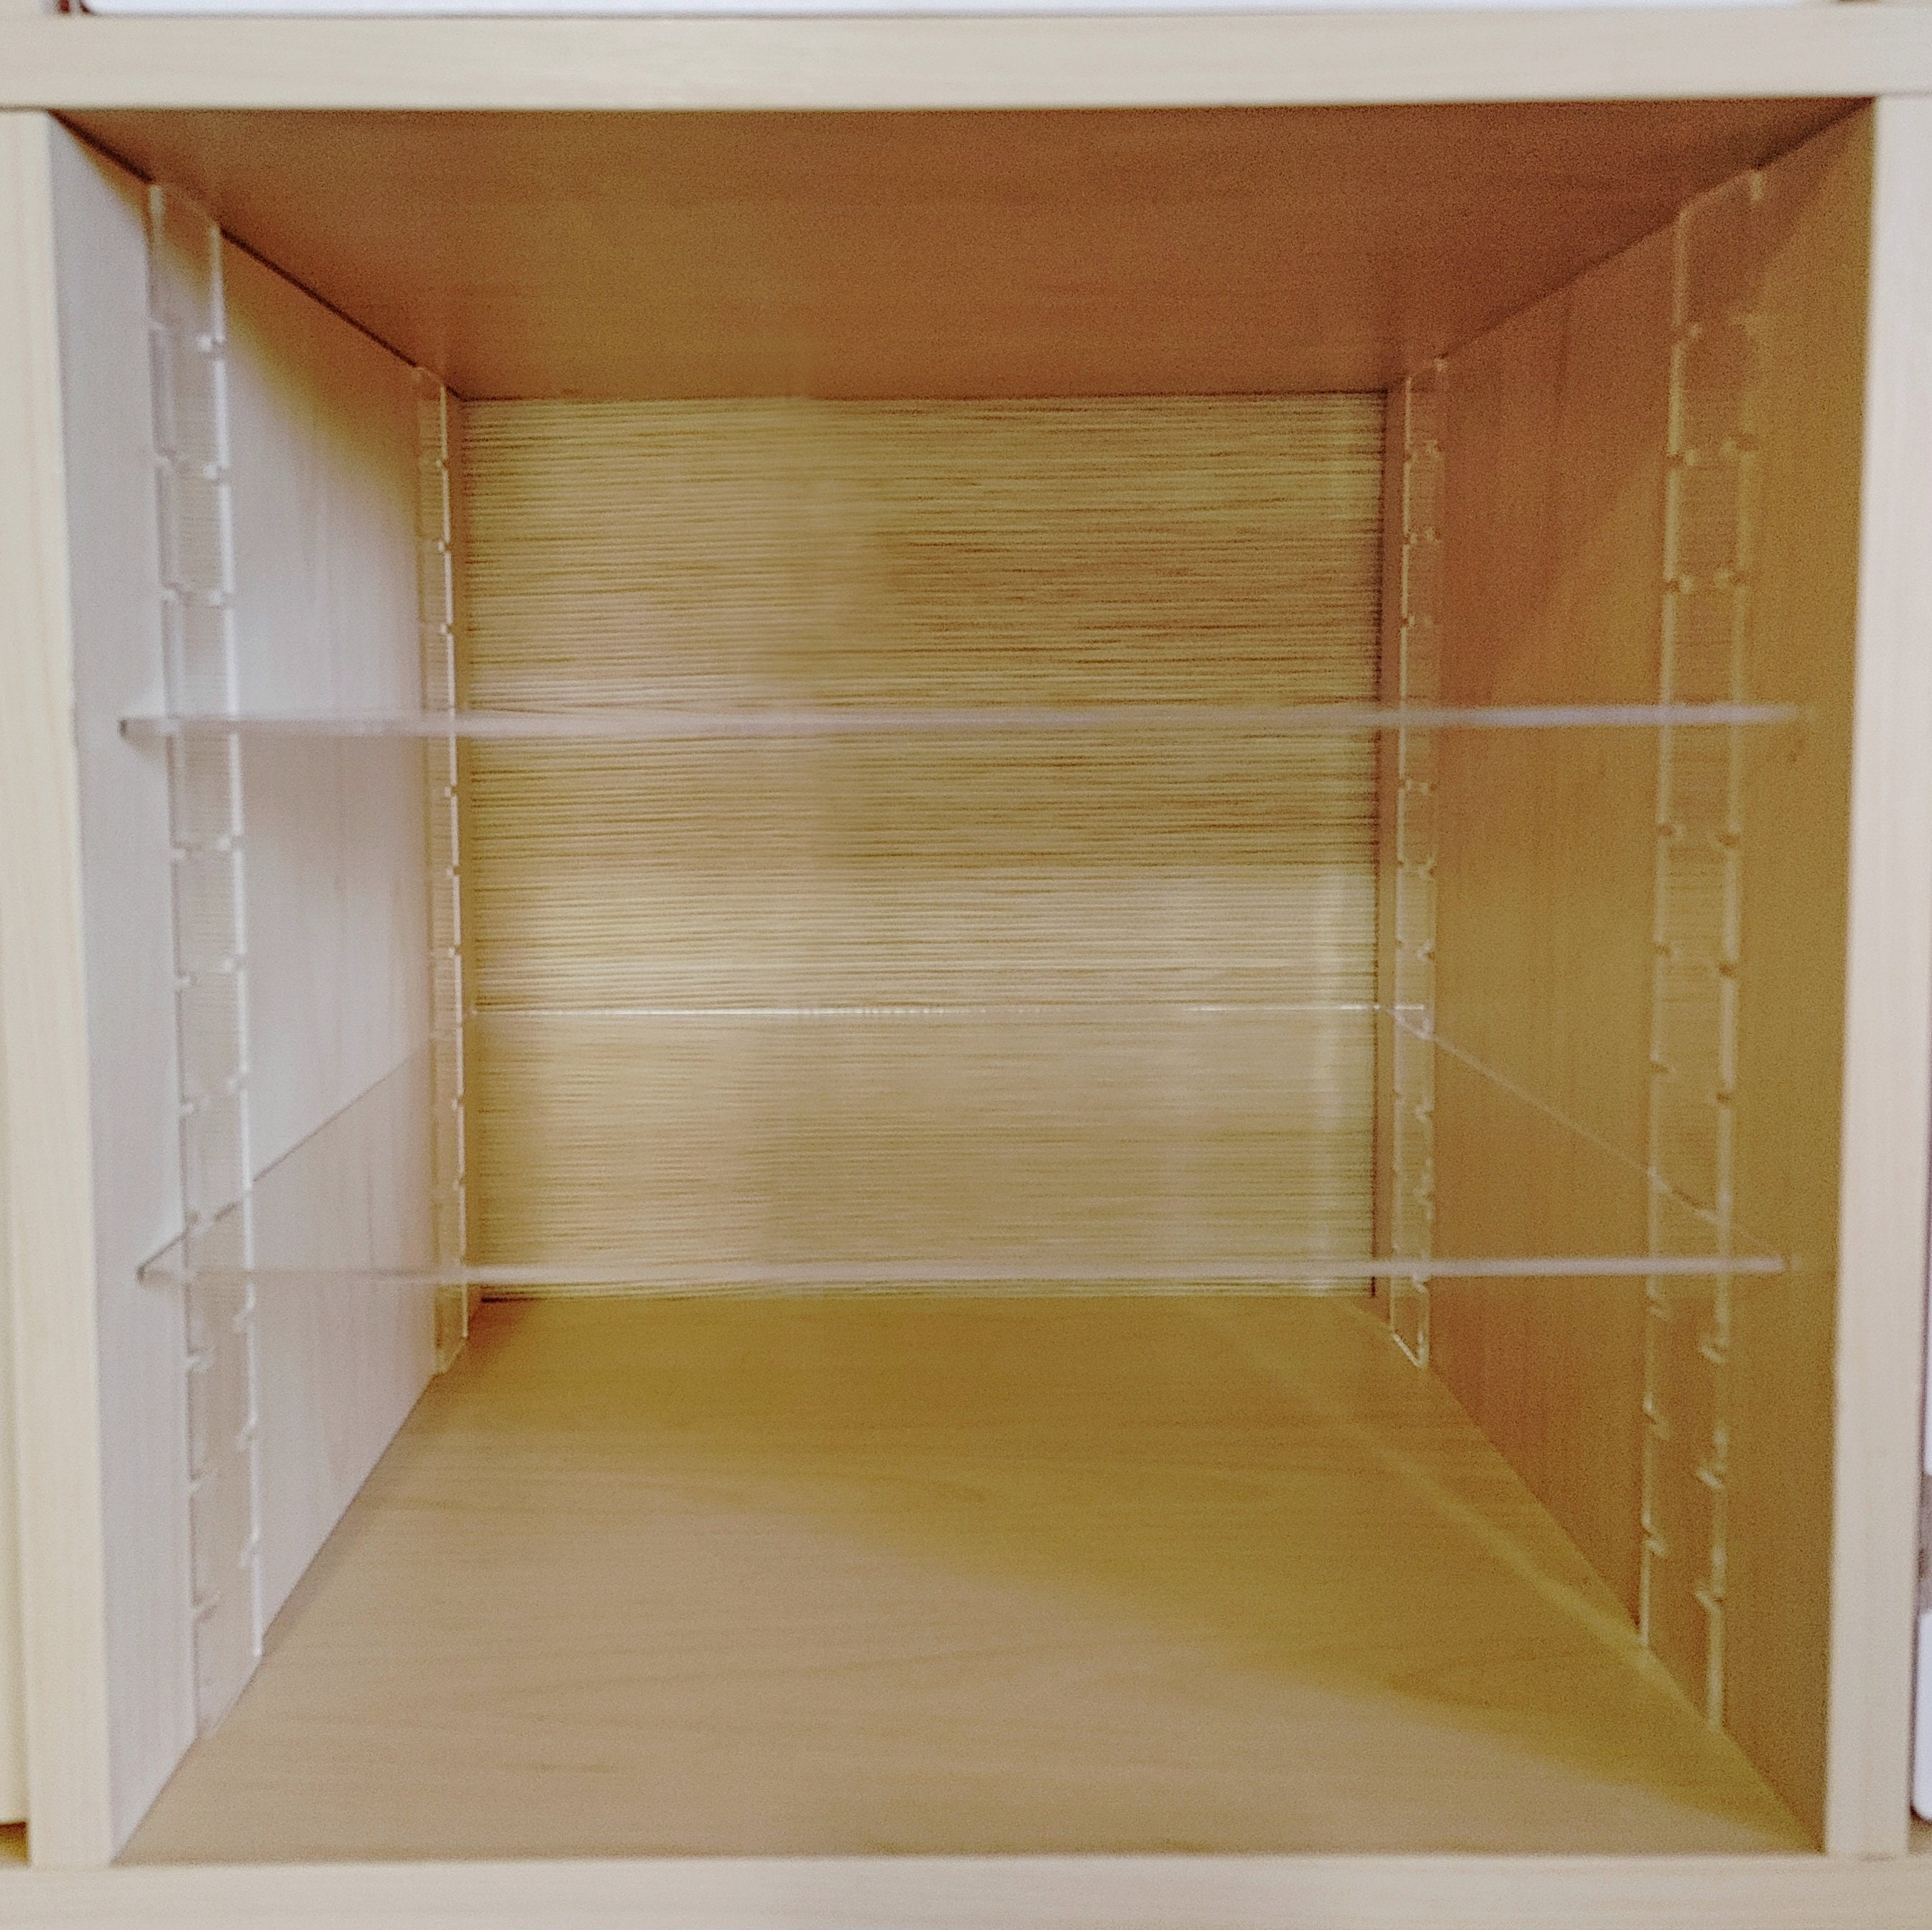 1 Shelf Clear Insert Acrylic Kallax Cube Shelf, Adjustable Shelves Ikea  Target Bookshelf Bookcase Divider Ikea Storage Organizer Bin 